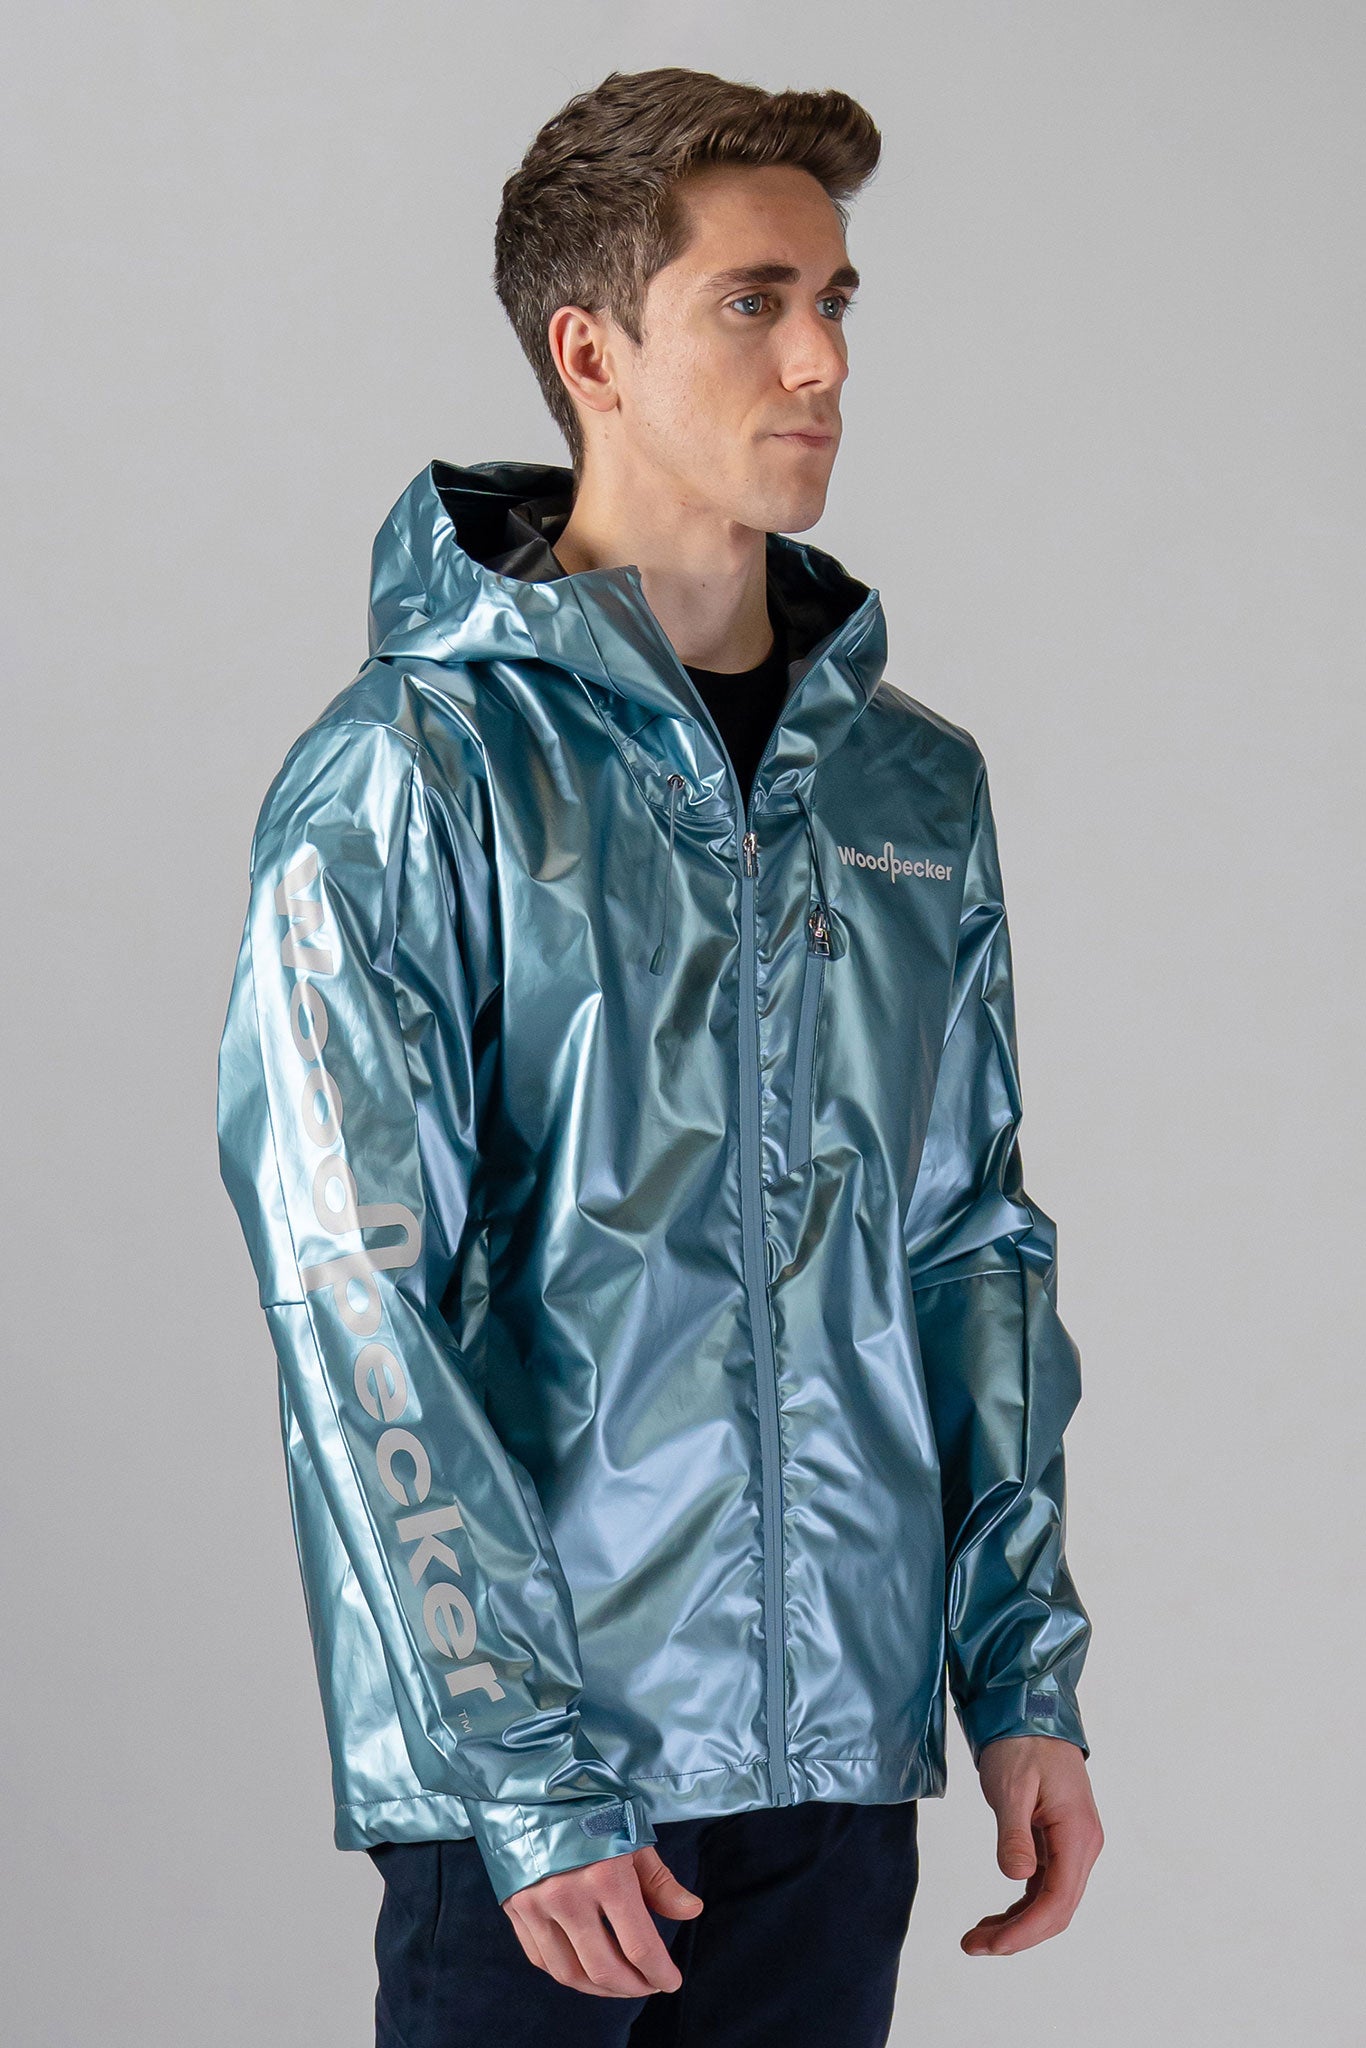 Woodpecker Men's Wind Shell coat. High-end Canadian designer activewear coat for men in 